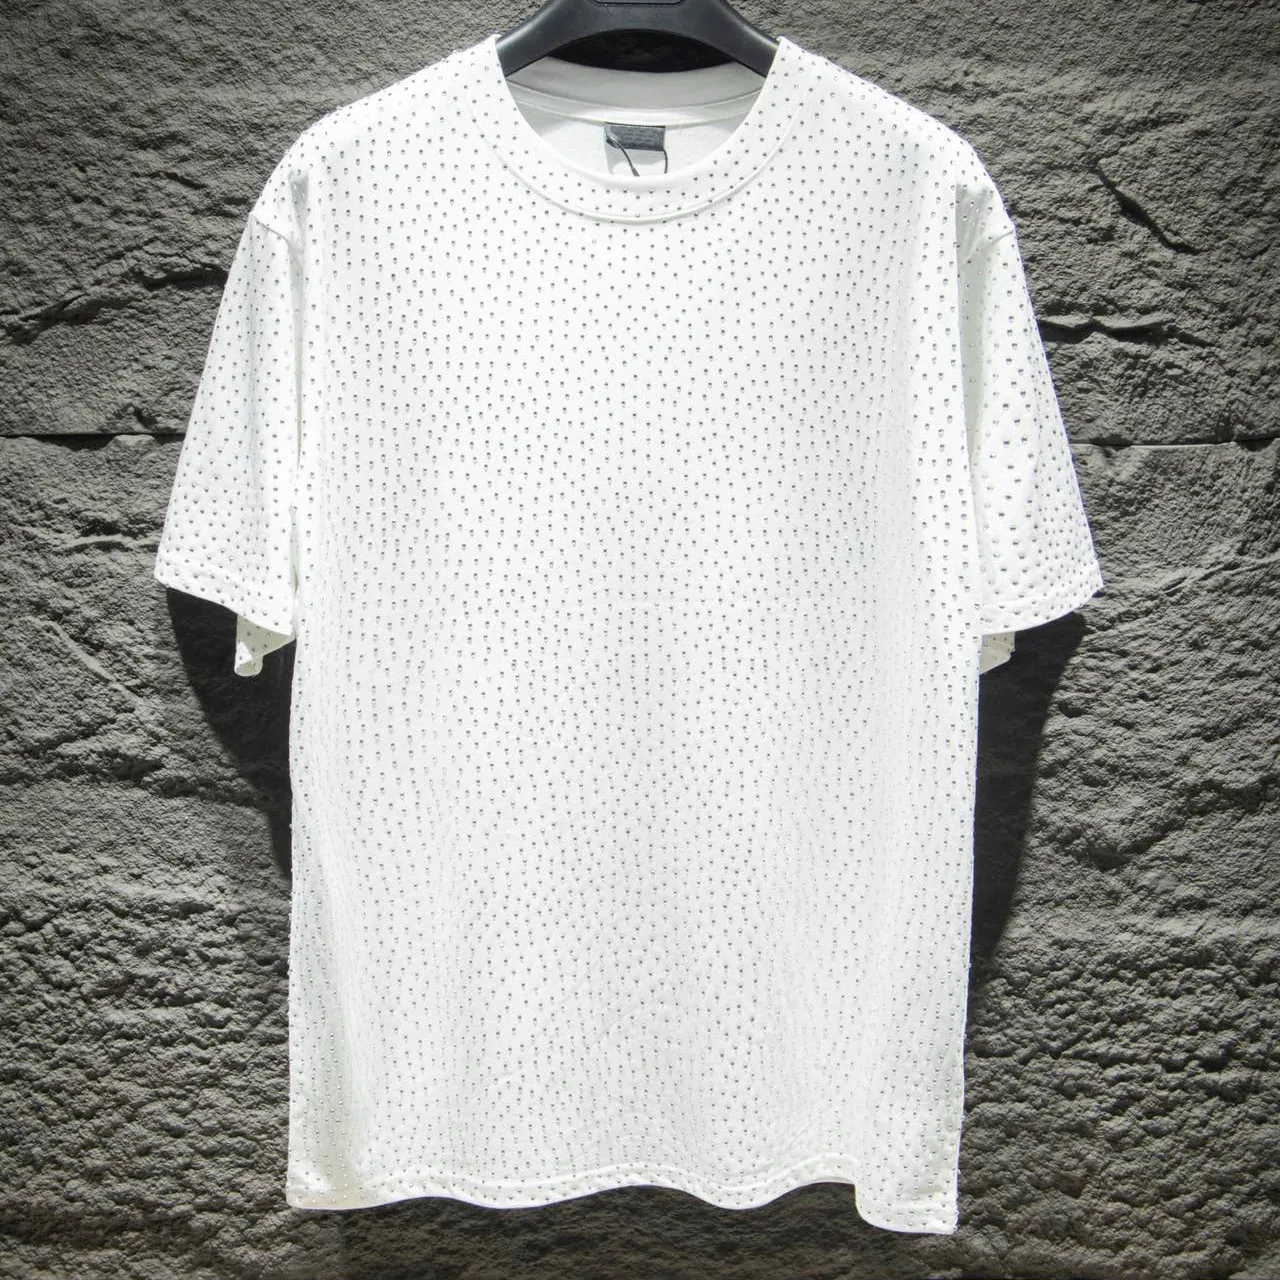 T-shirt da uomo T-shirt Polo Girocollo stampato stile polare abbigliamento estivo con t-shirt BA in puro cotone street felpe BALen28122293